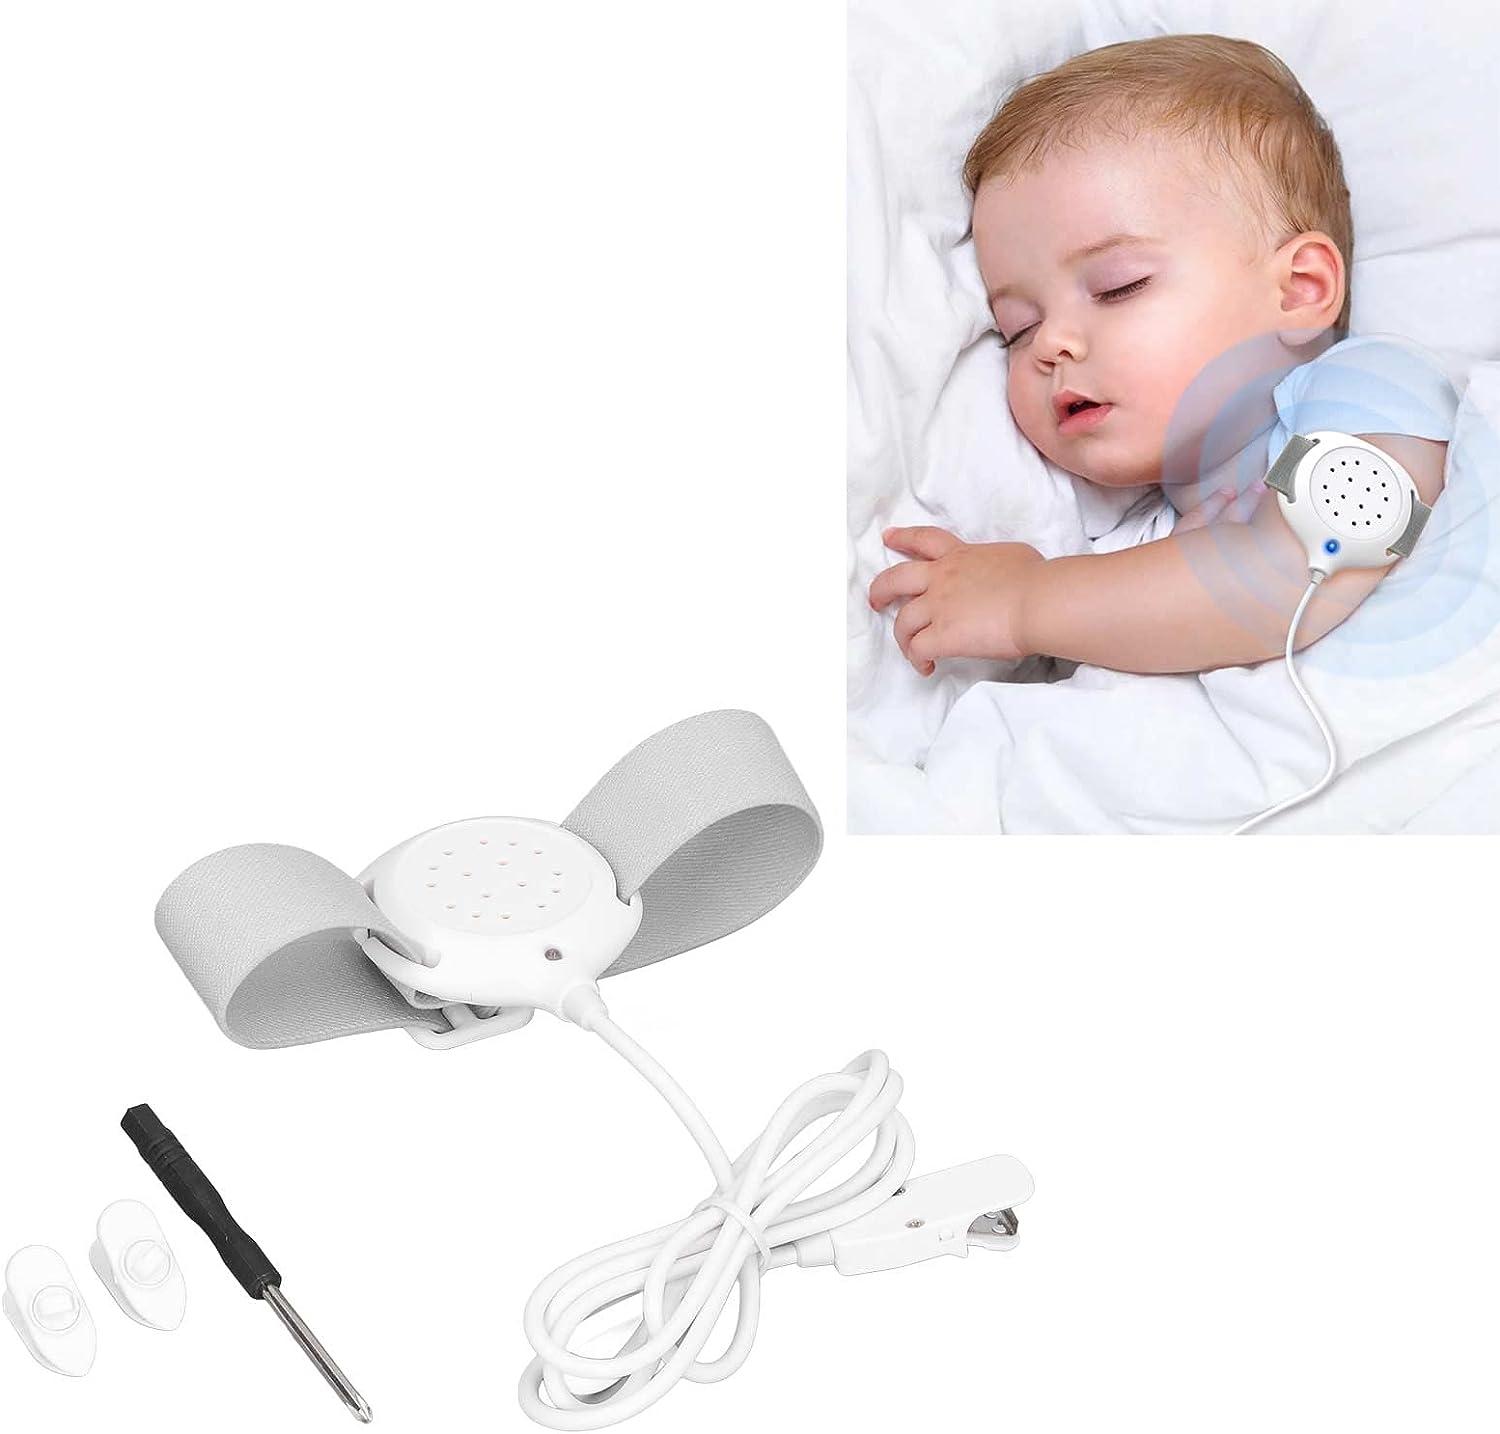 Baby Bed Wetting Alarm Infant Toddler Enuresis Arm Wear Smart Diaper Sensor